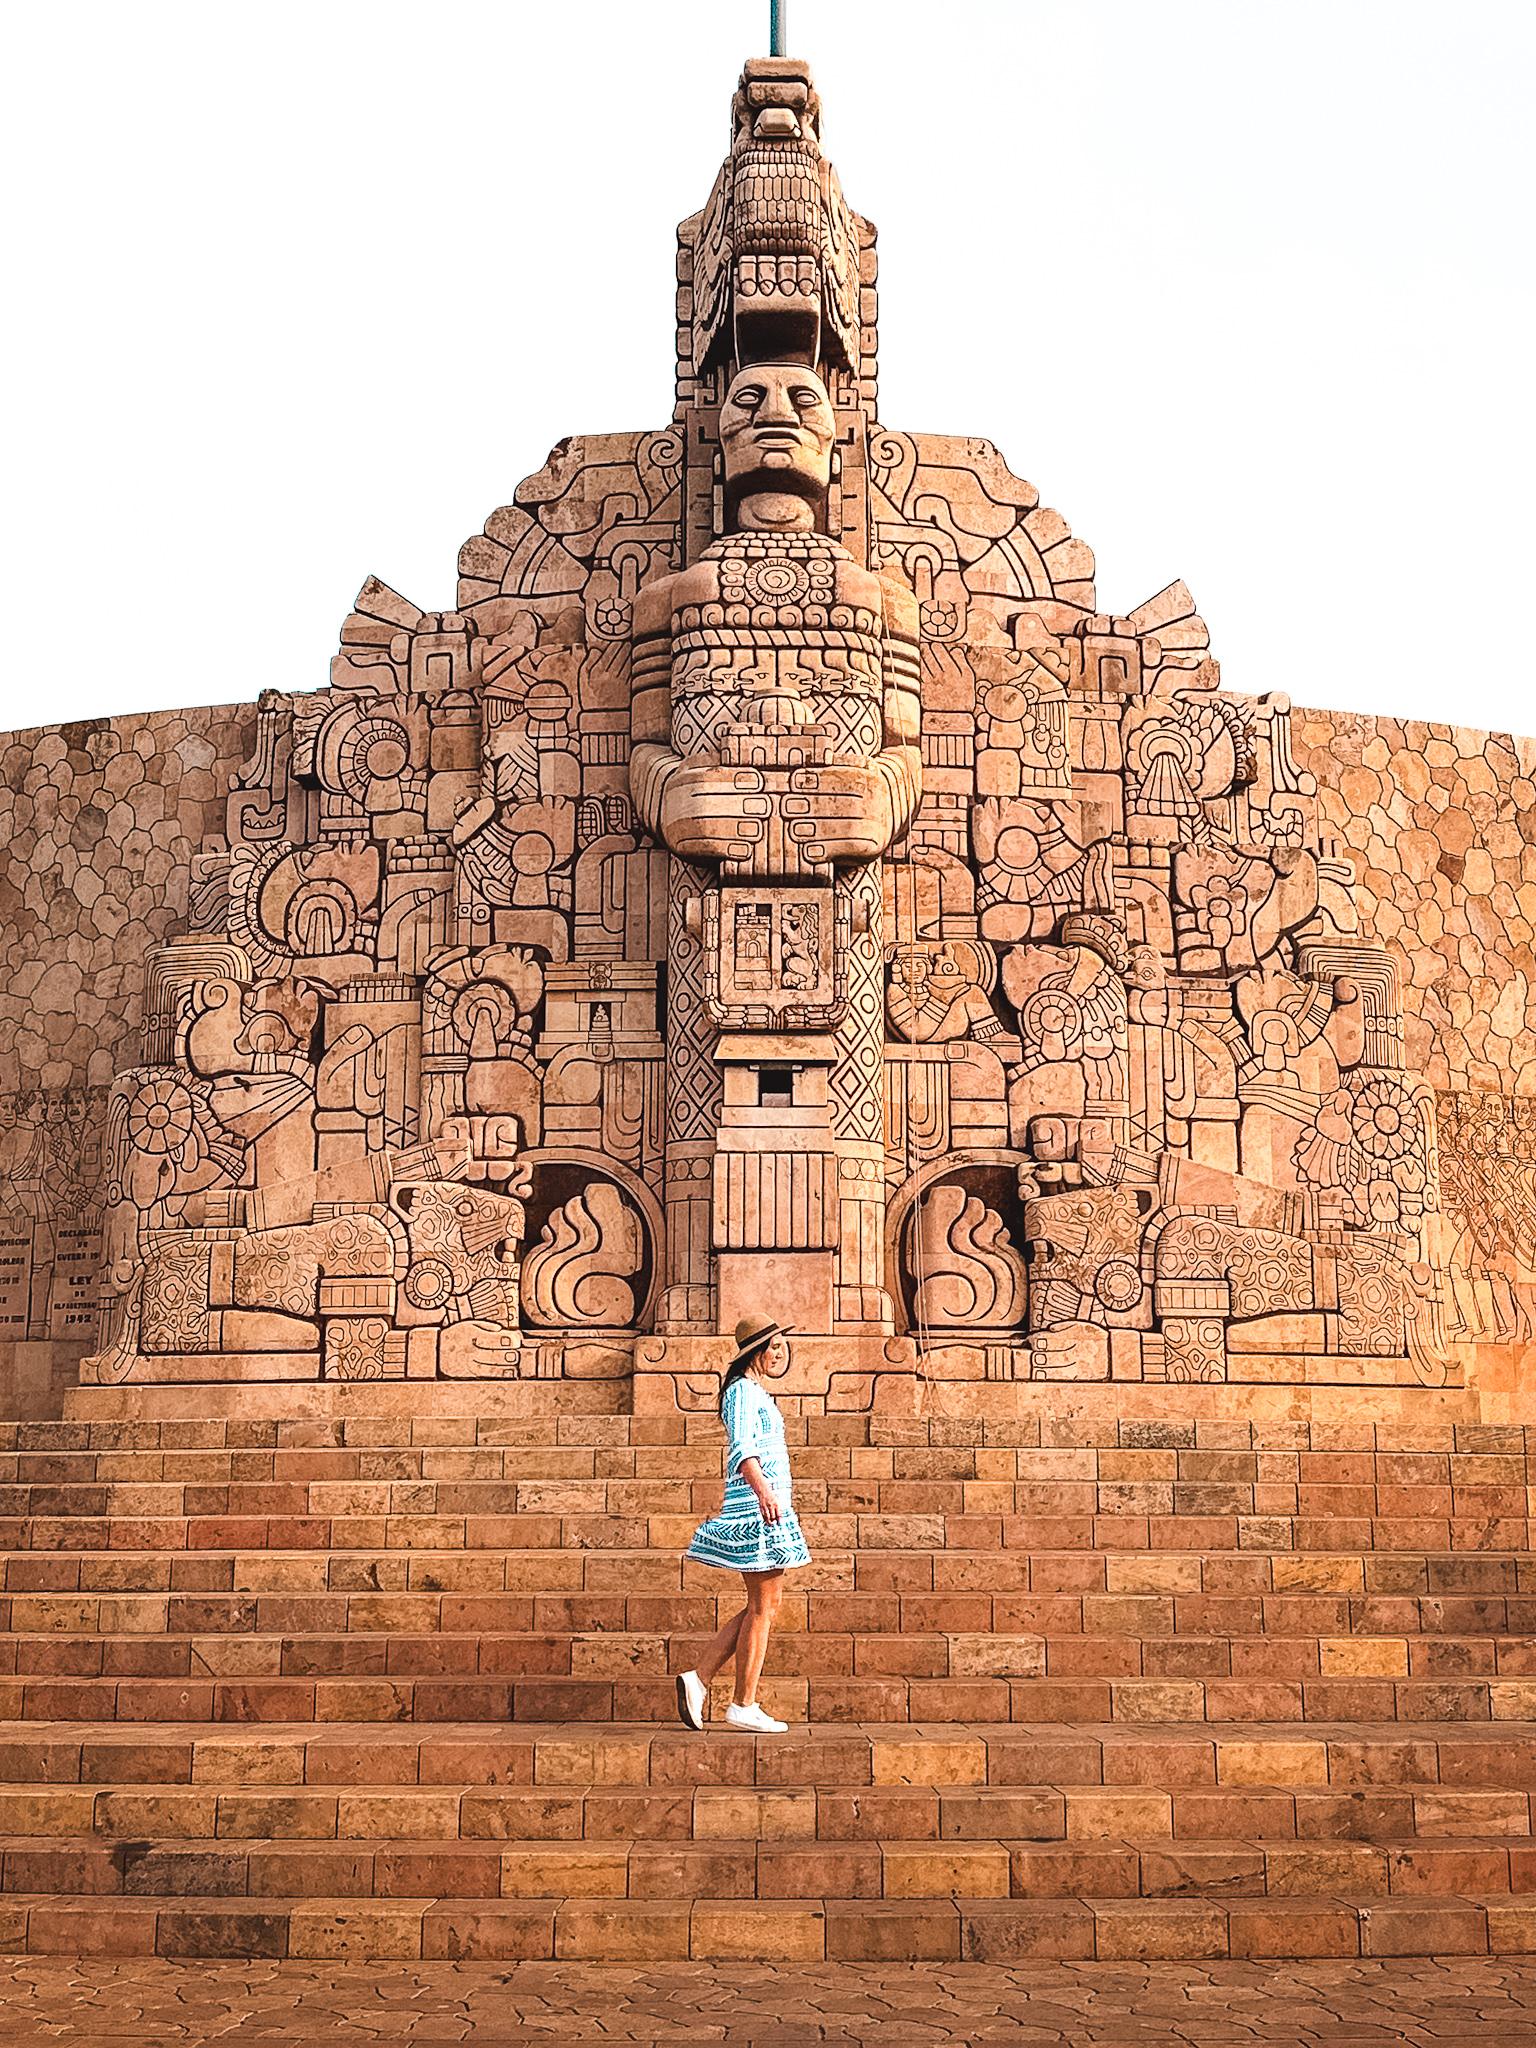 Merida, Mexico - Monumento a La Patria Mayan style monument in Merida